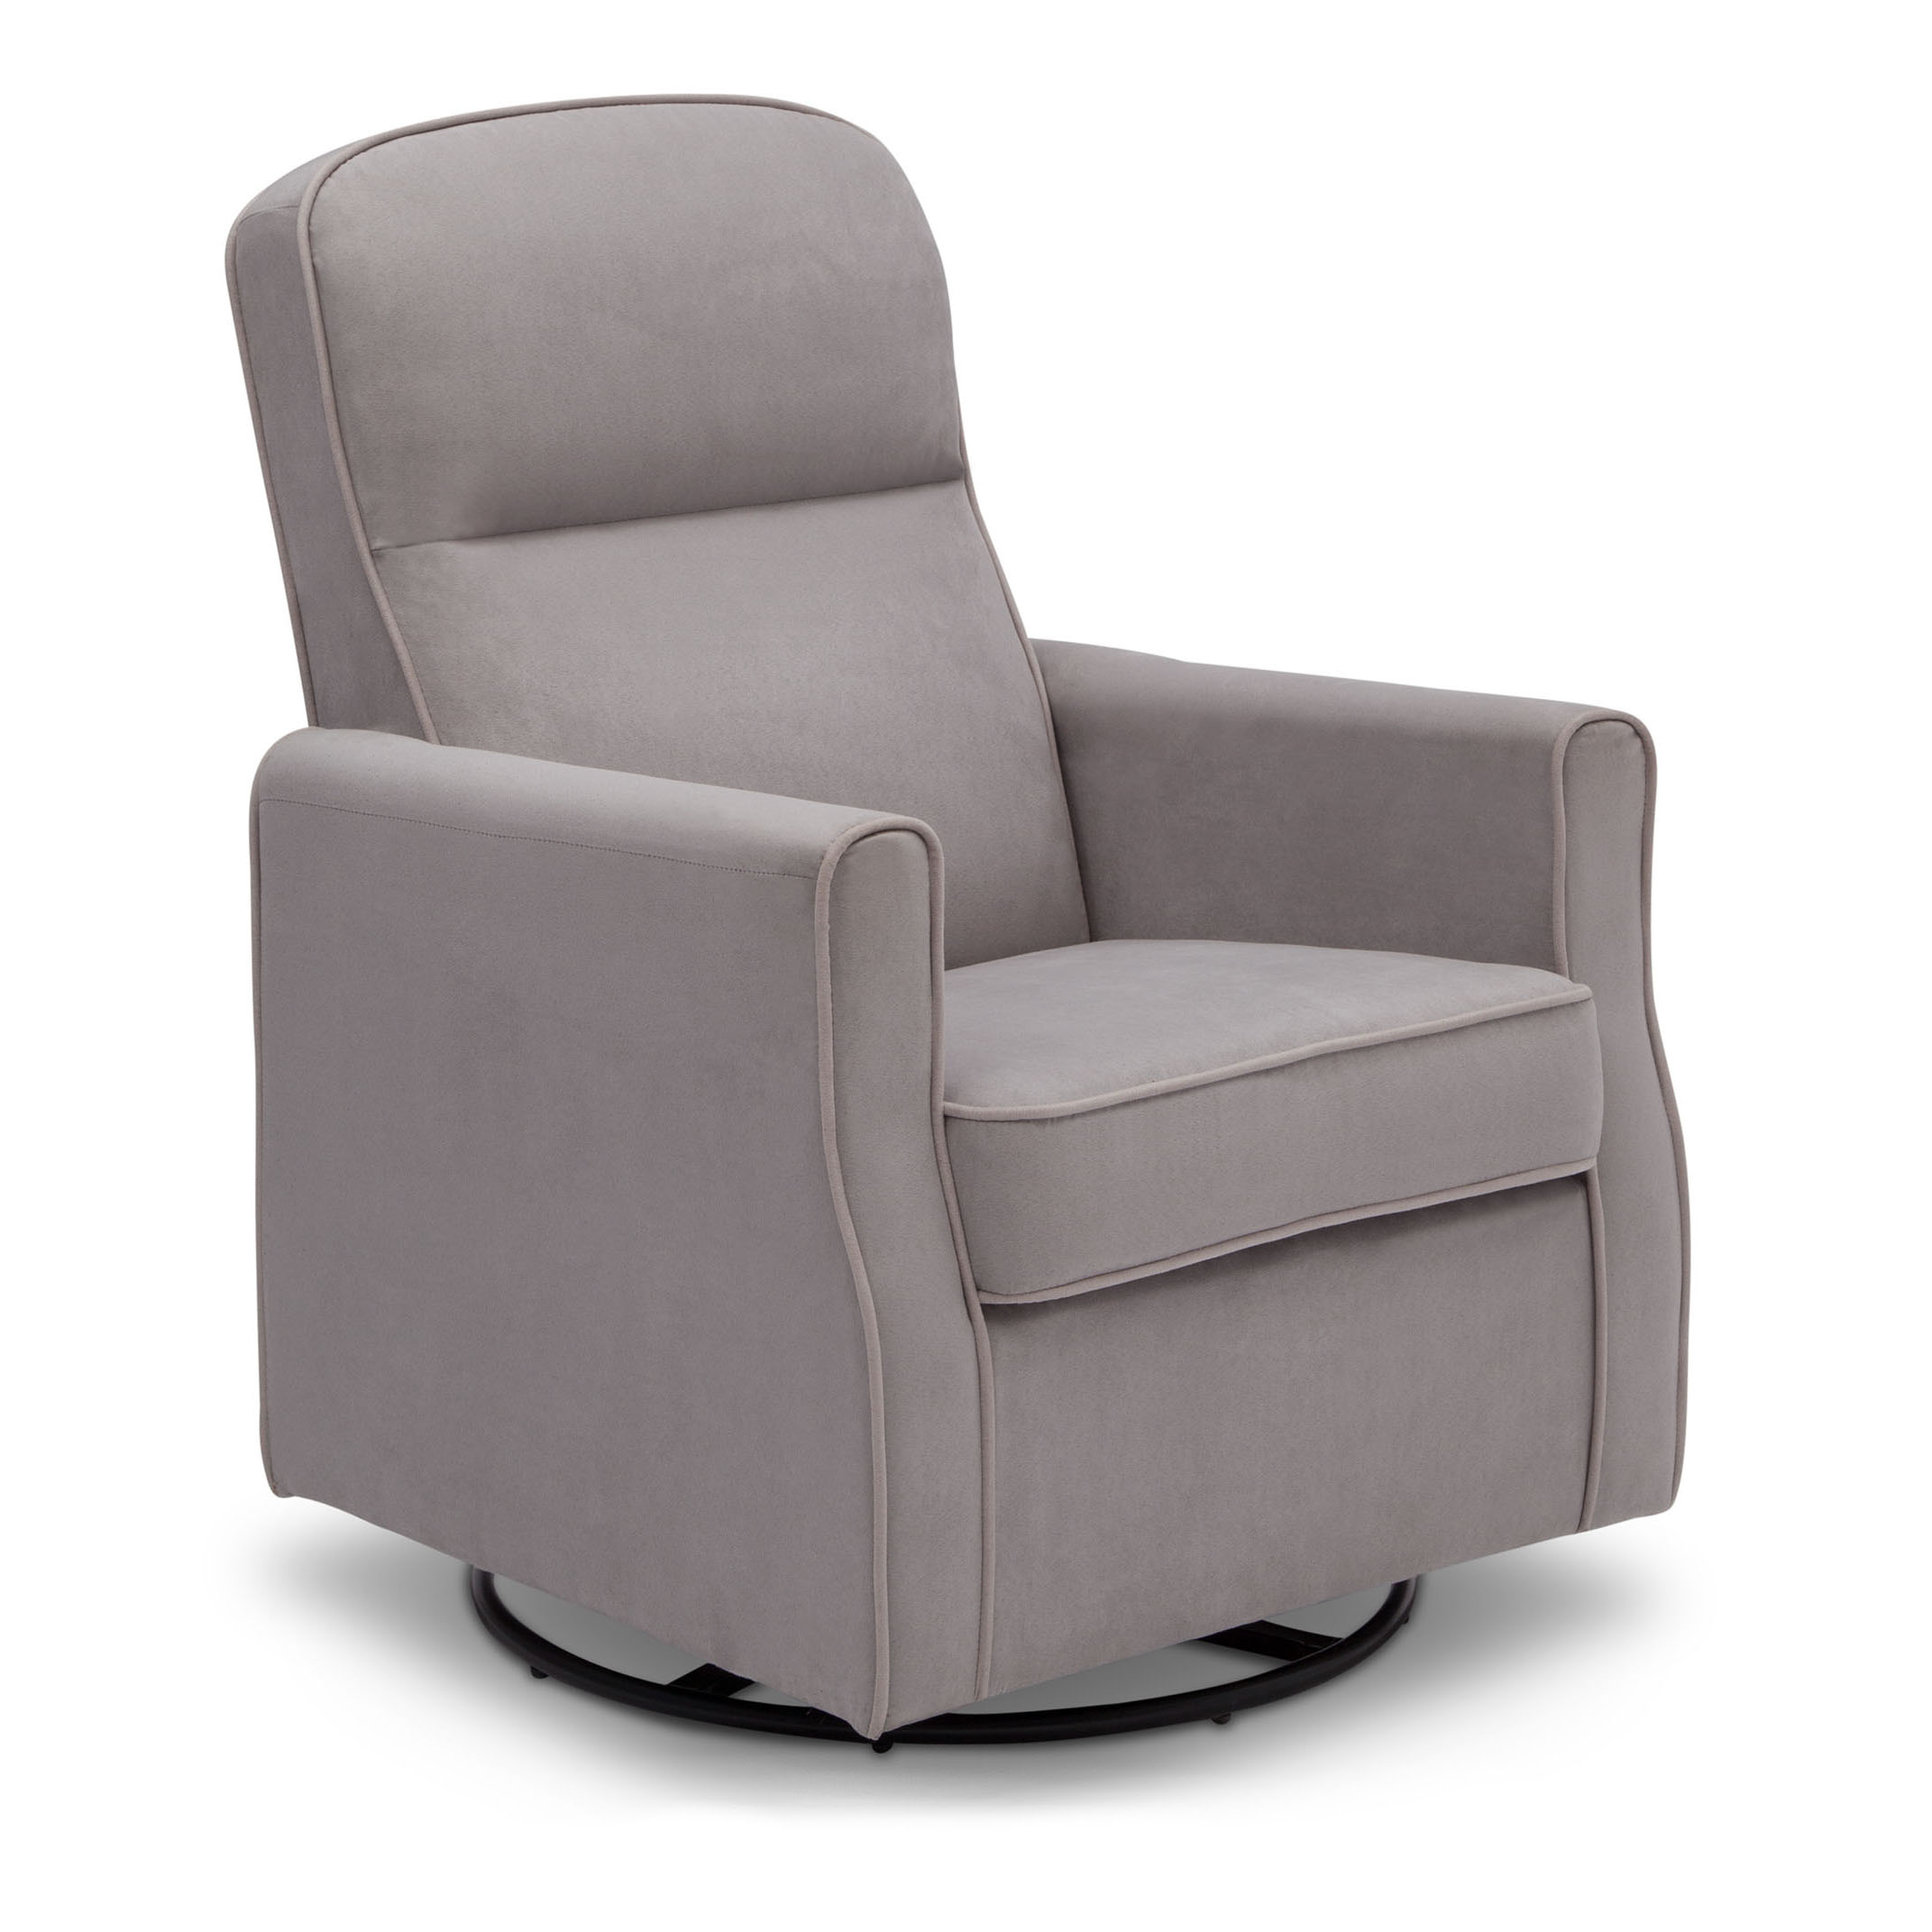 Delta Children Clair Slim Nursery Glider Swivel Rocker Chair, Dove Gray - image 4 of 15